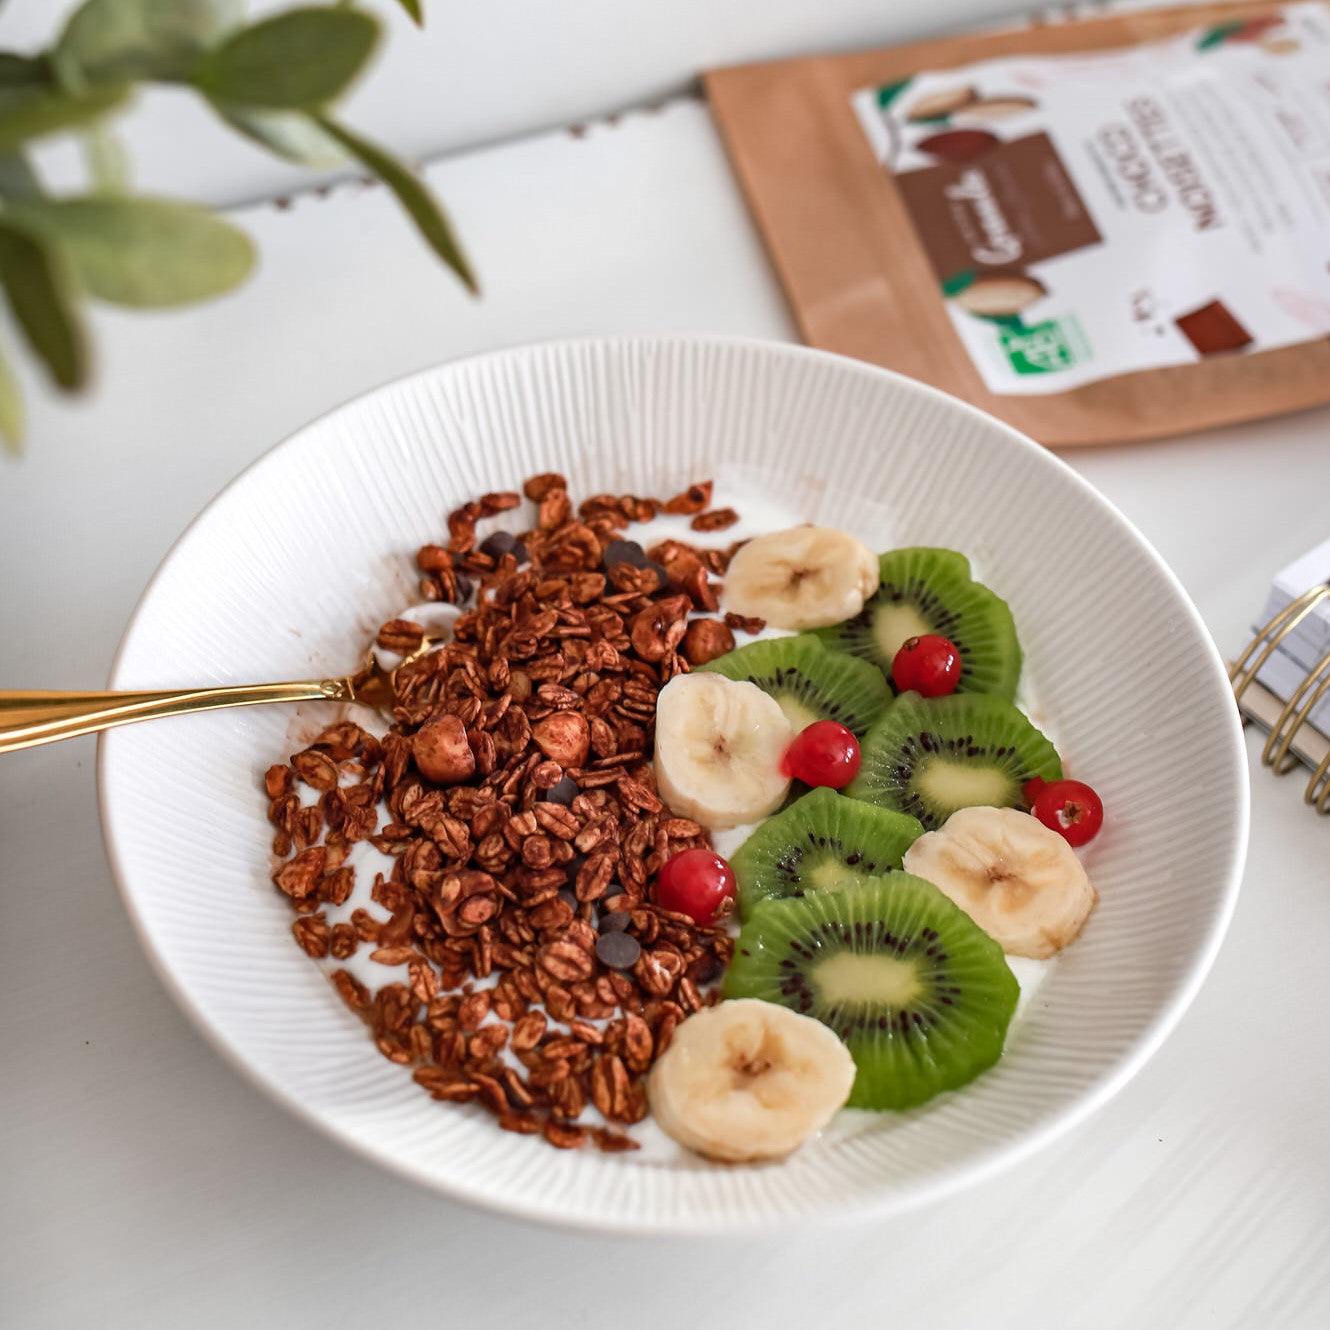 Bol de granola chocolat noisettes fève tonka bio avec des fruits (kiwi/ bananes)